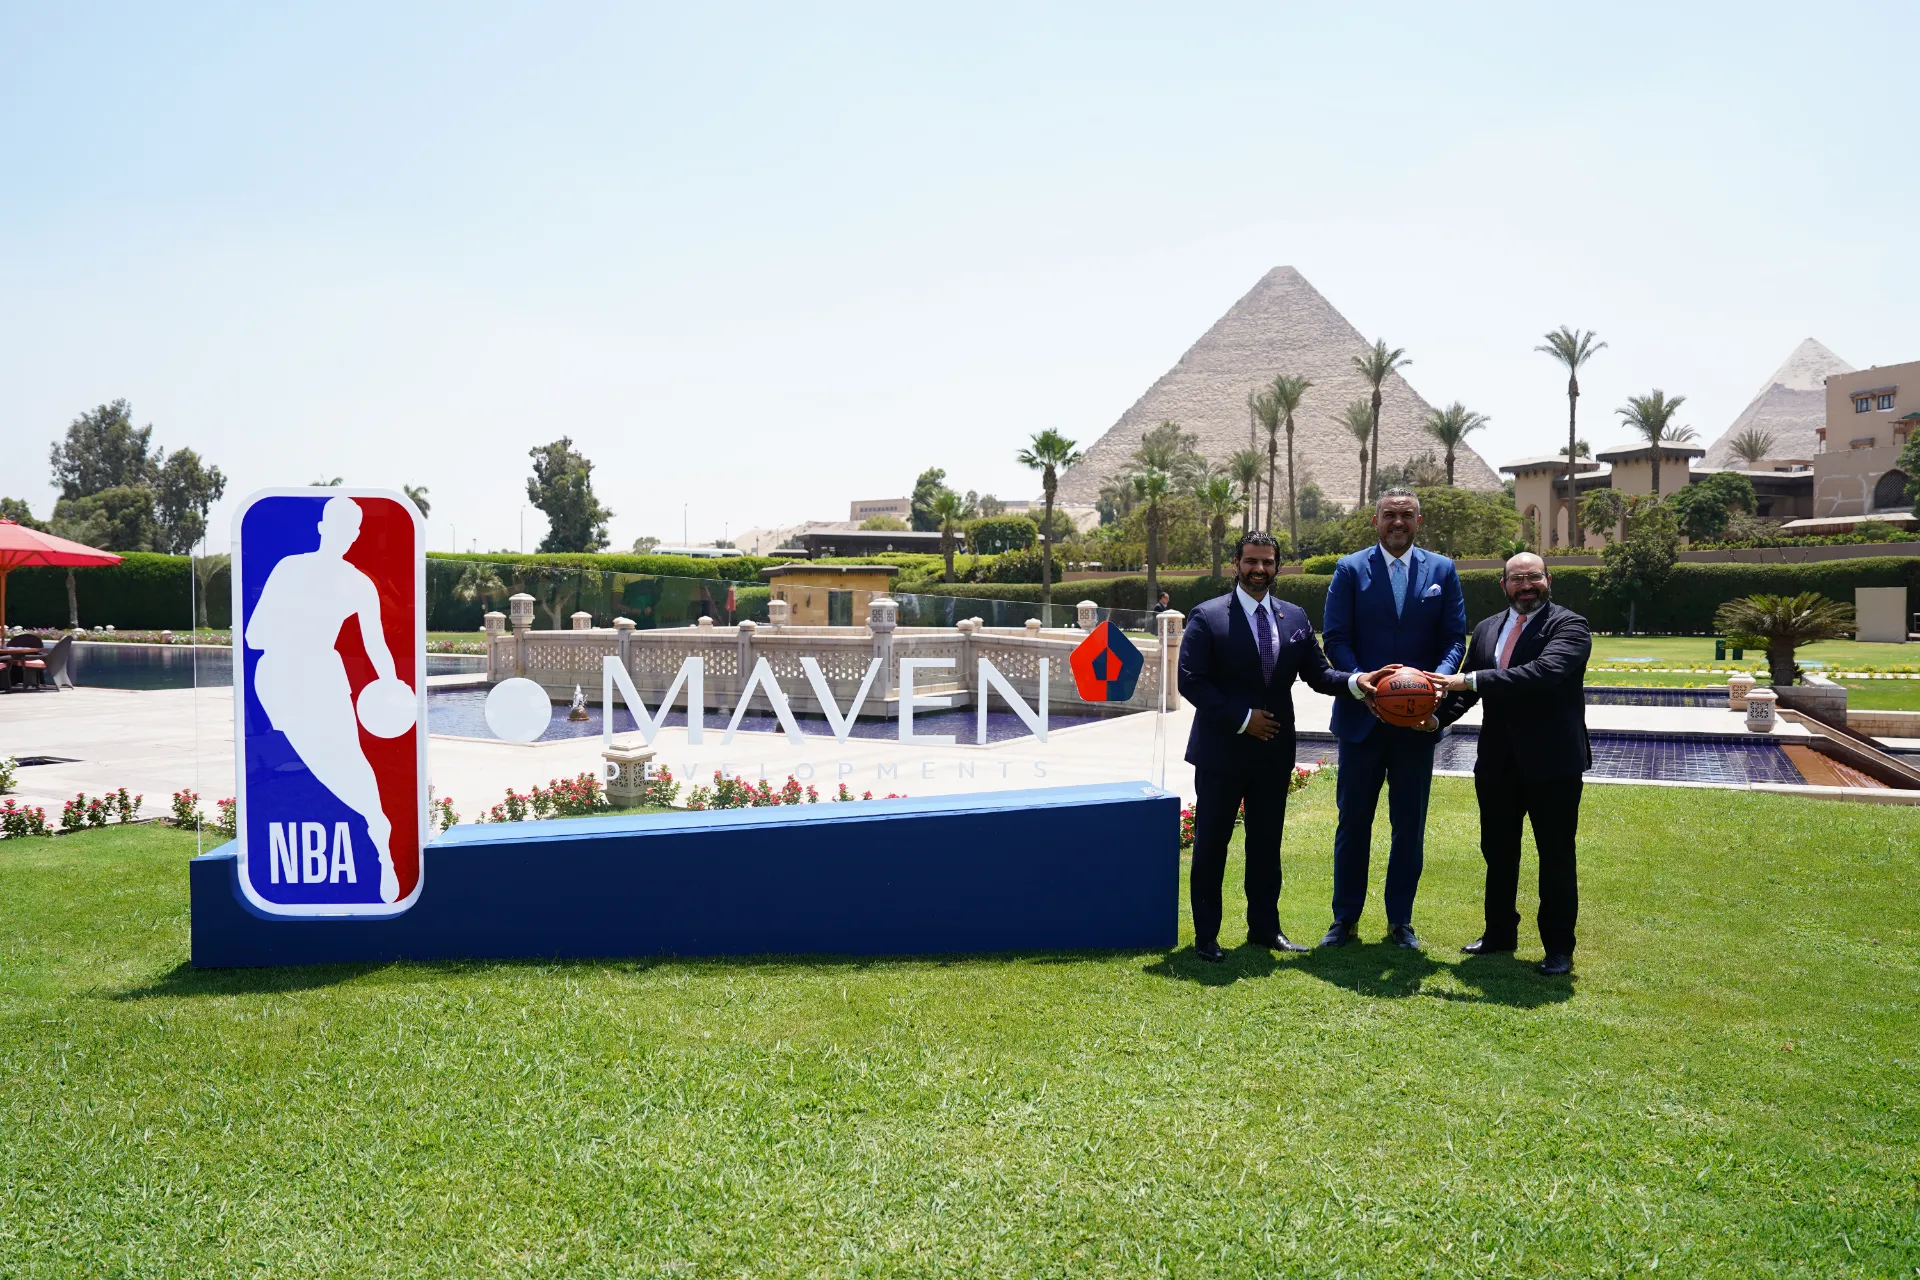 NBA and Maven press conference